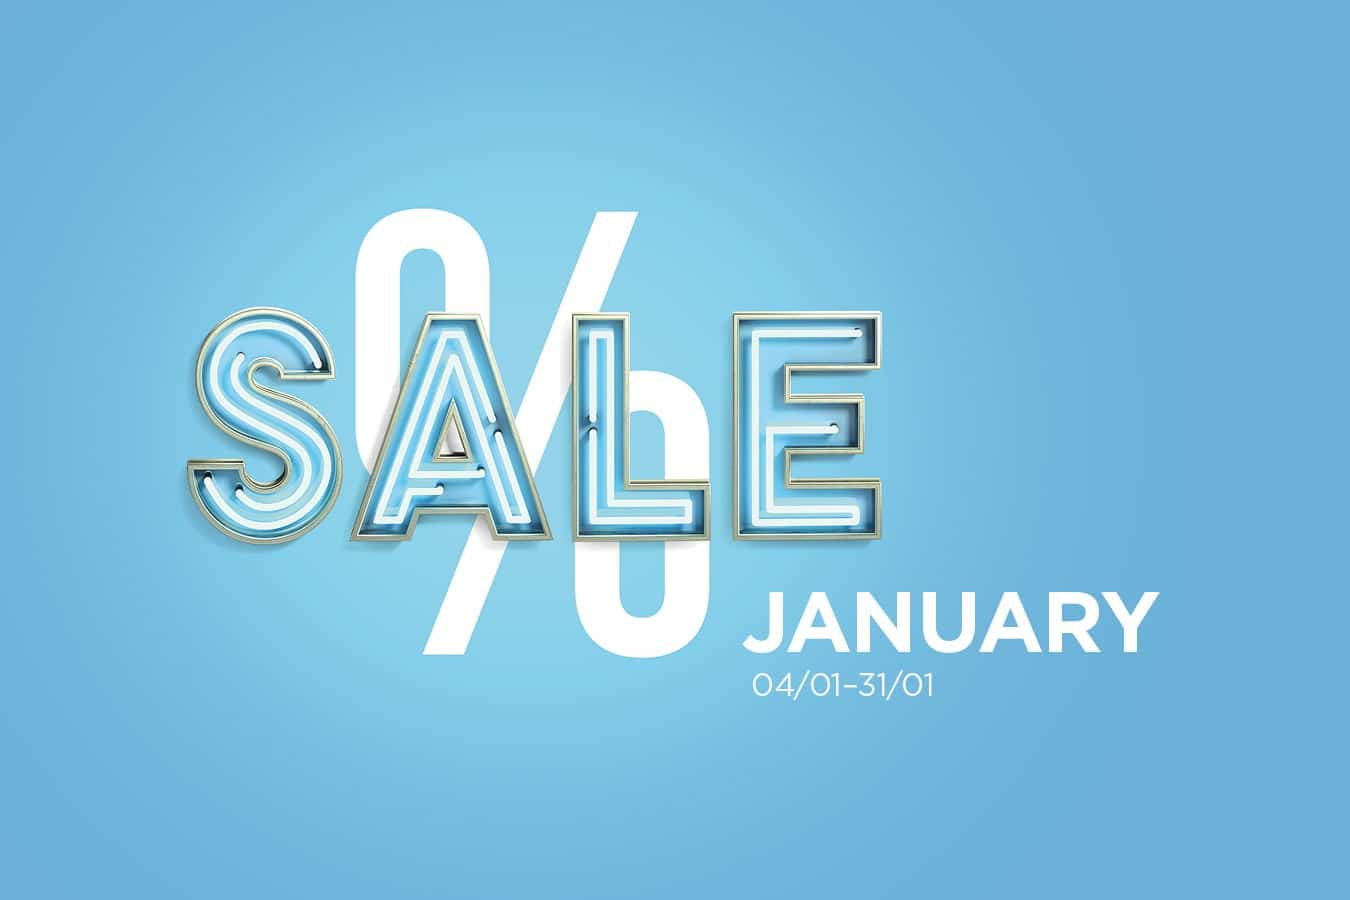 J13255 January sales website header 1350x900 v1aw